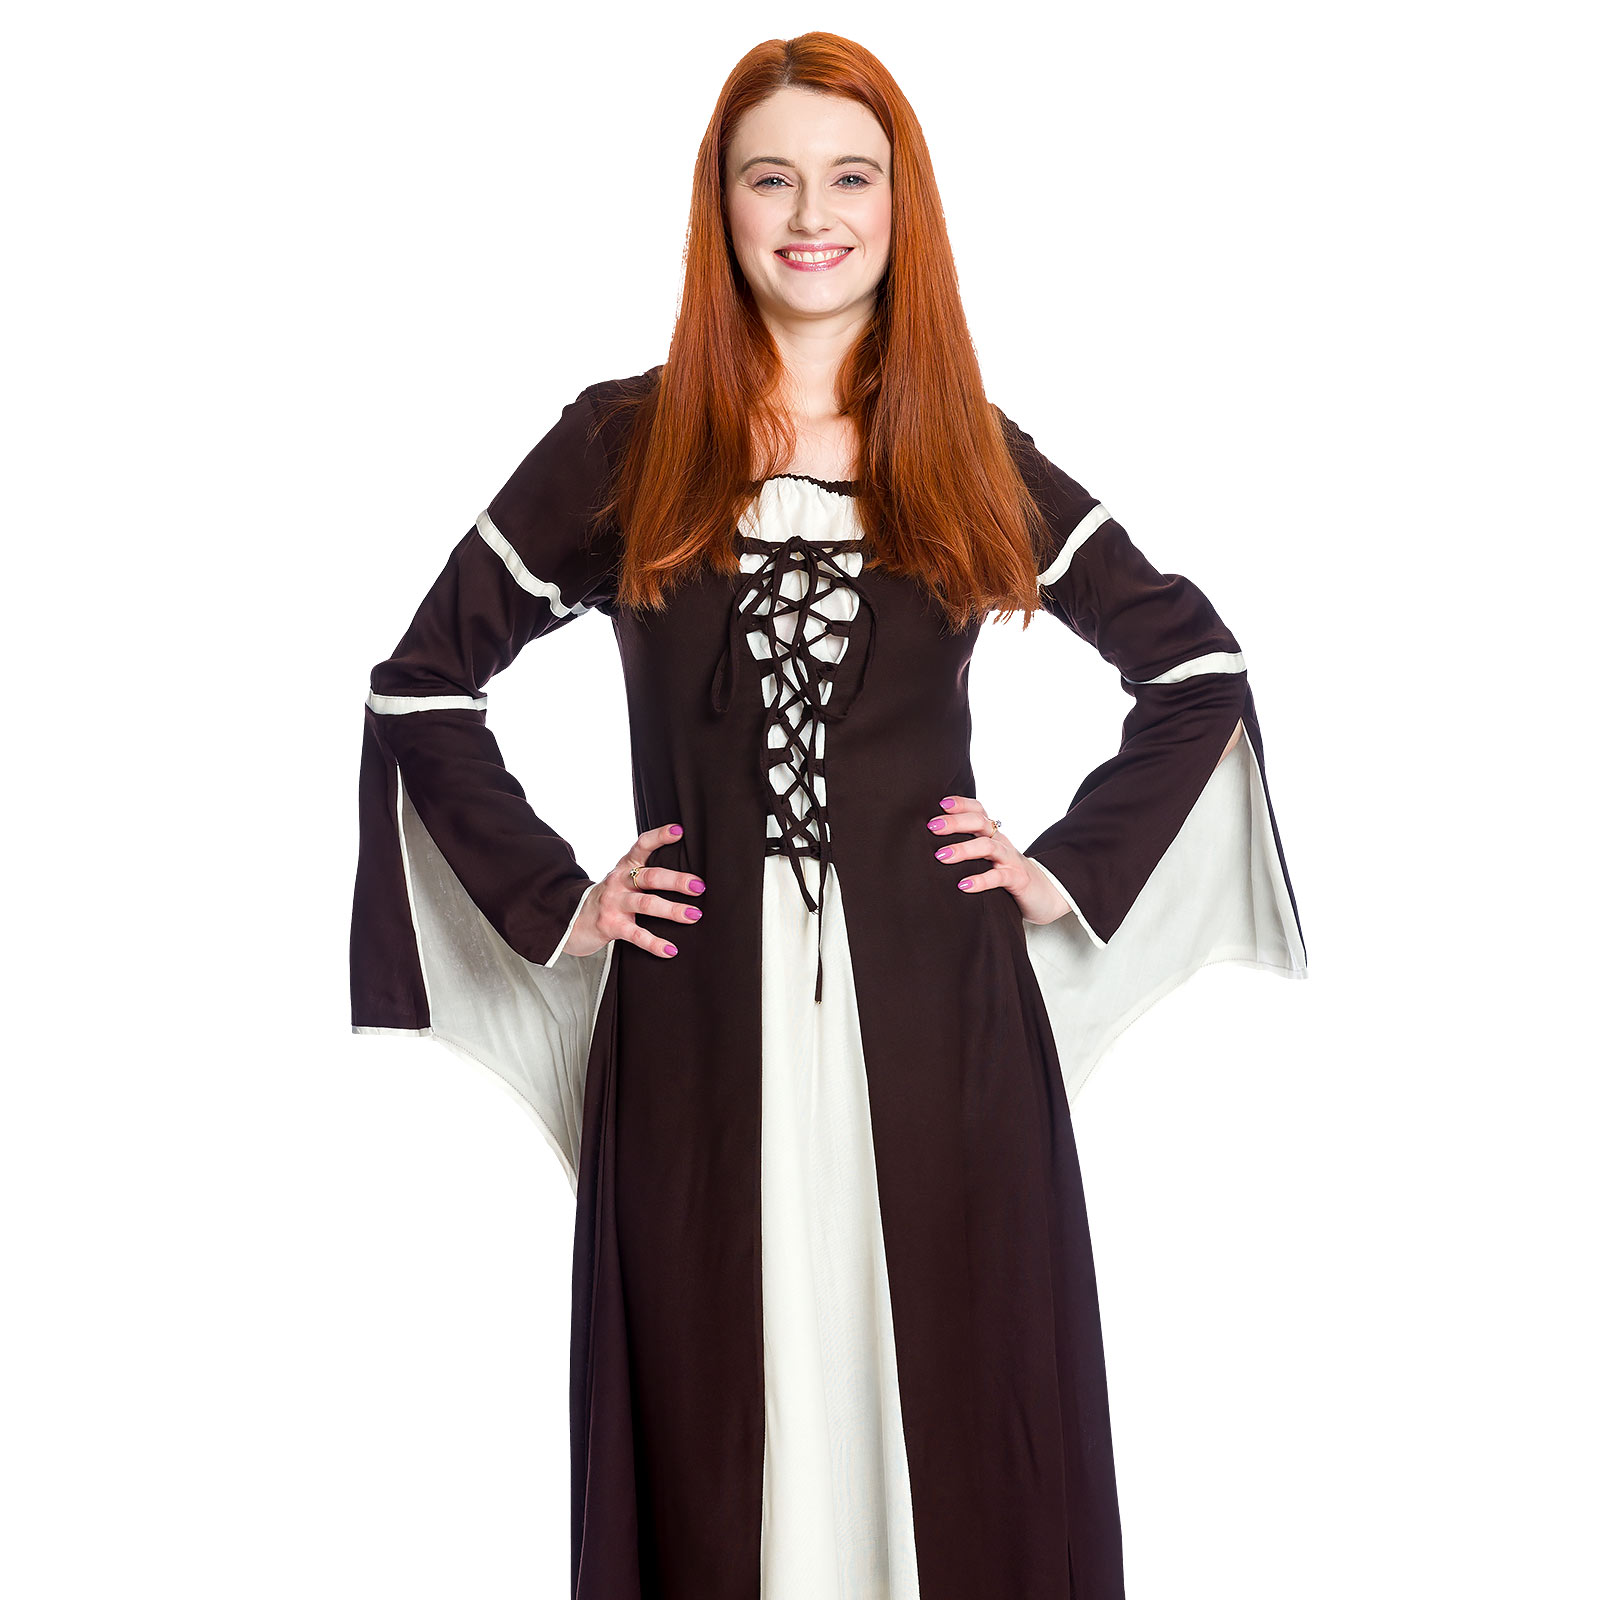 Medieval dress Katherina brown-nature